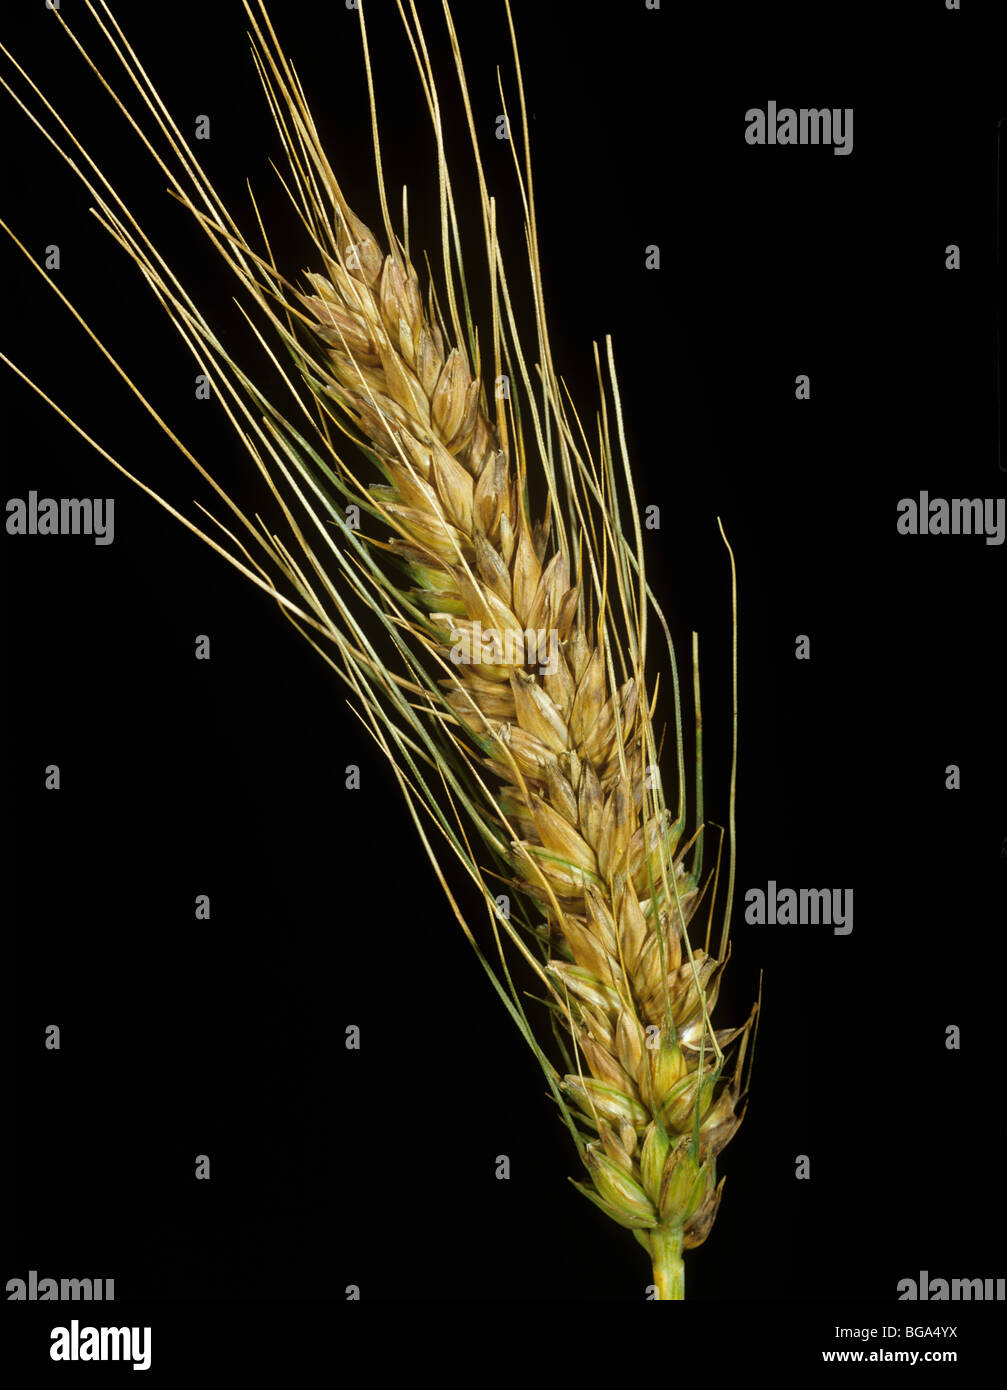 Glume blotch (Phaeosphaeria nodorum) lesions on ears of bearded (awned) wheat Stock Photo